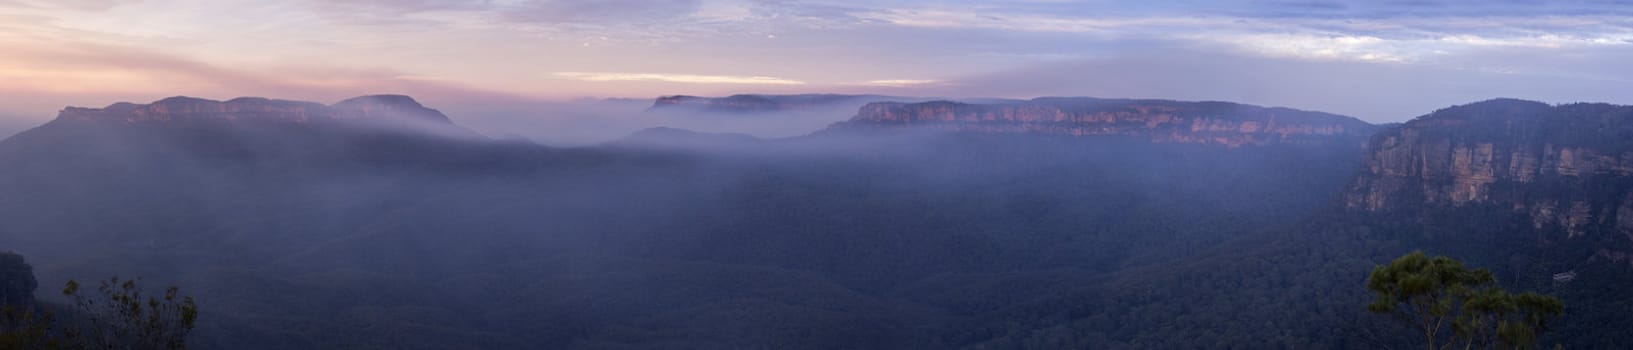 Blue Mountains - New South Wales, Australia 